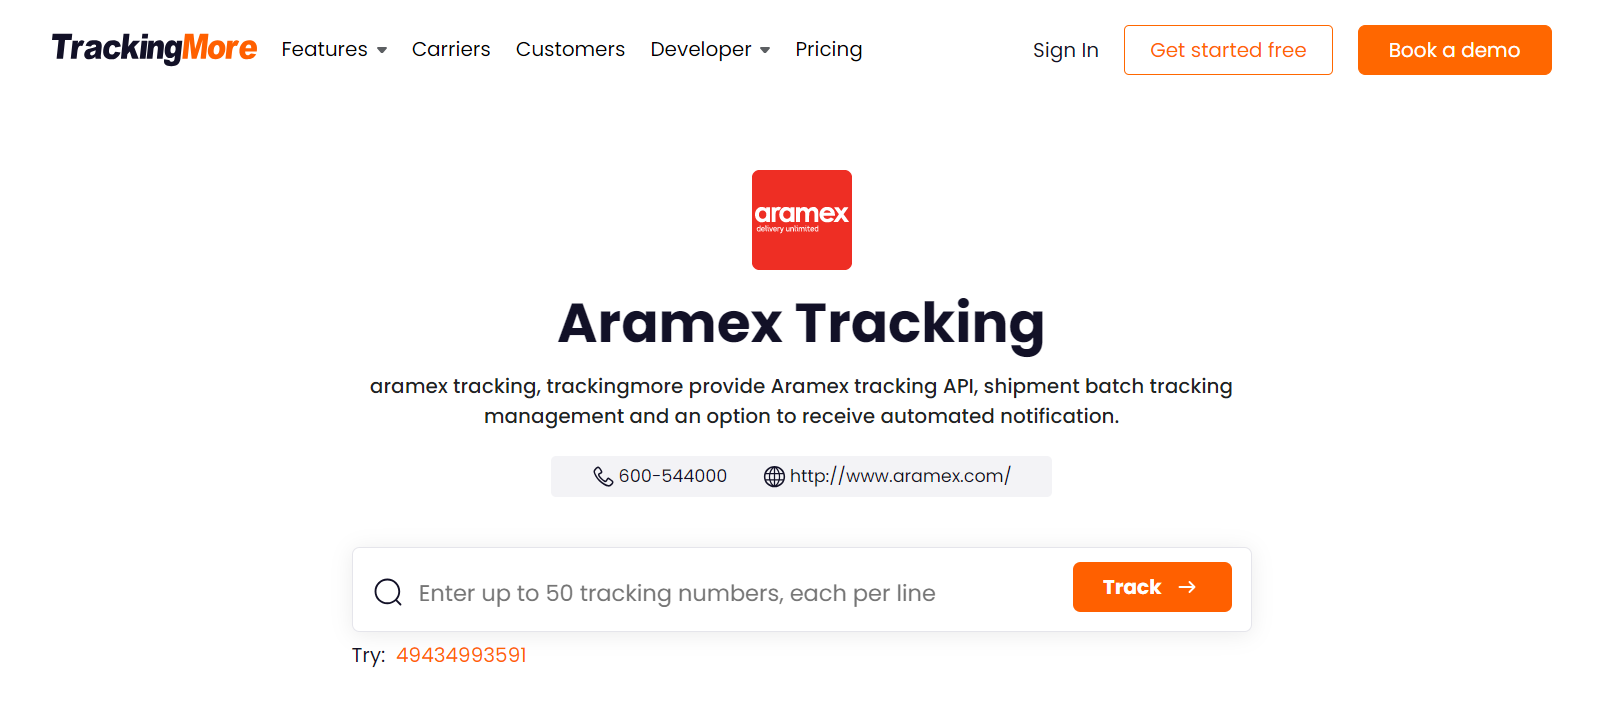 TrackingMore Aramex tracking page